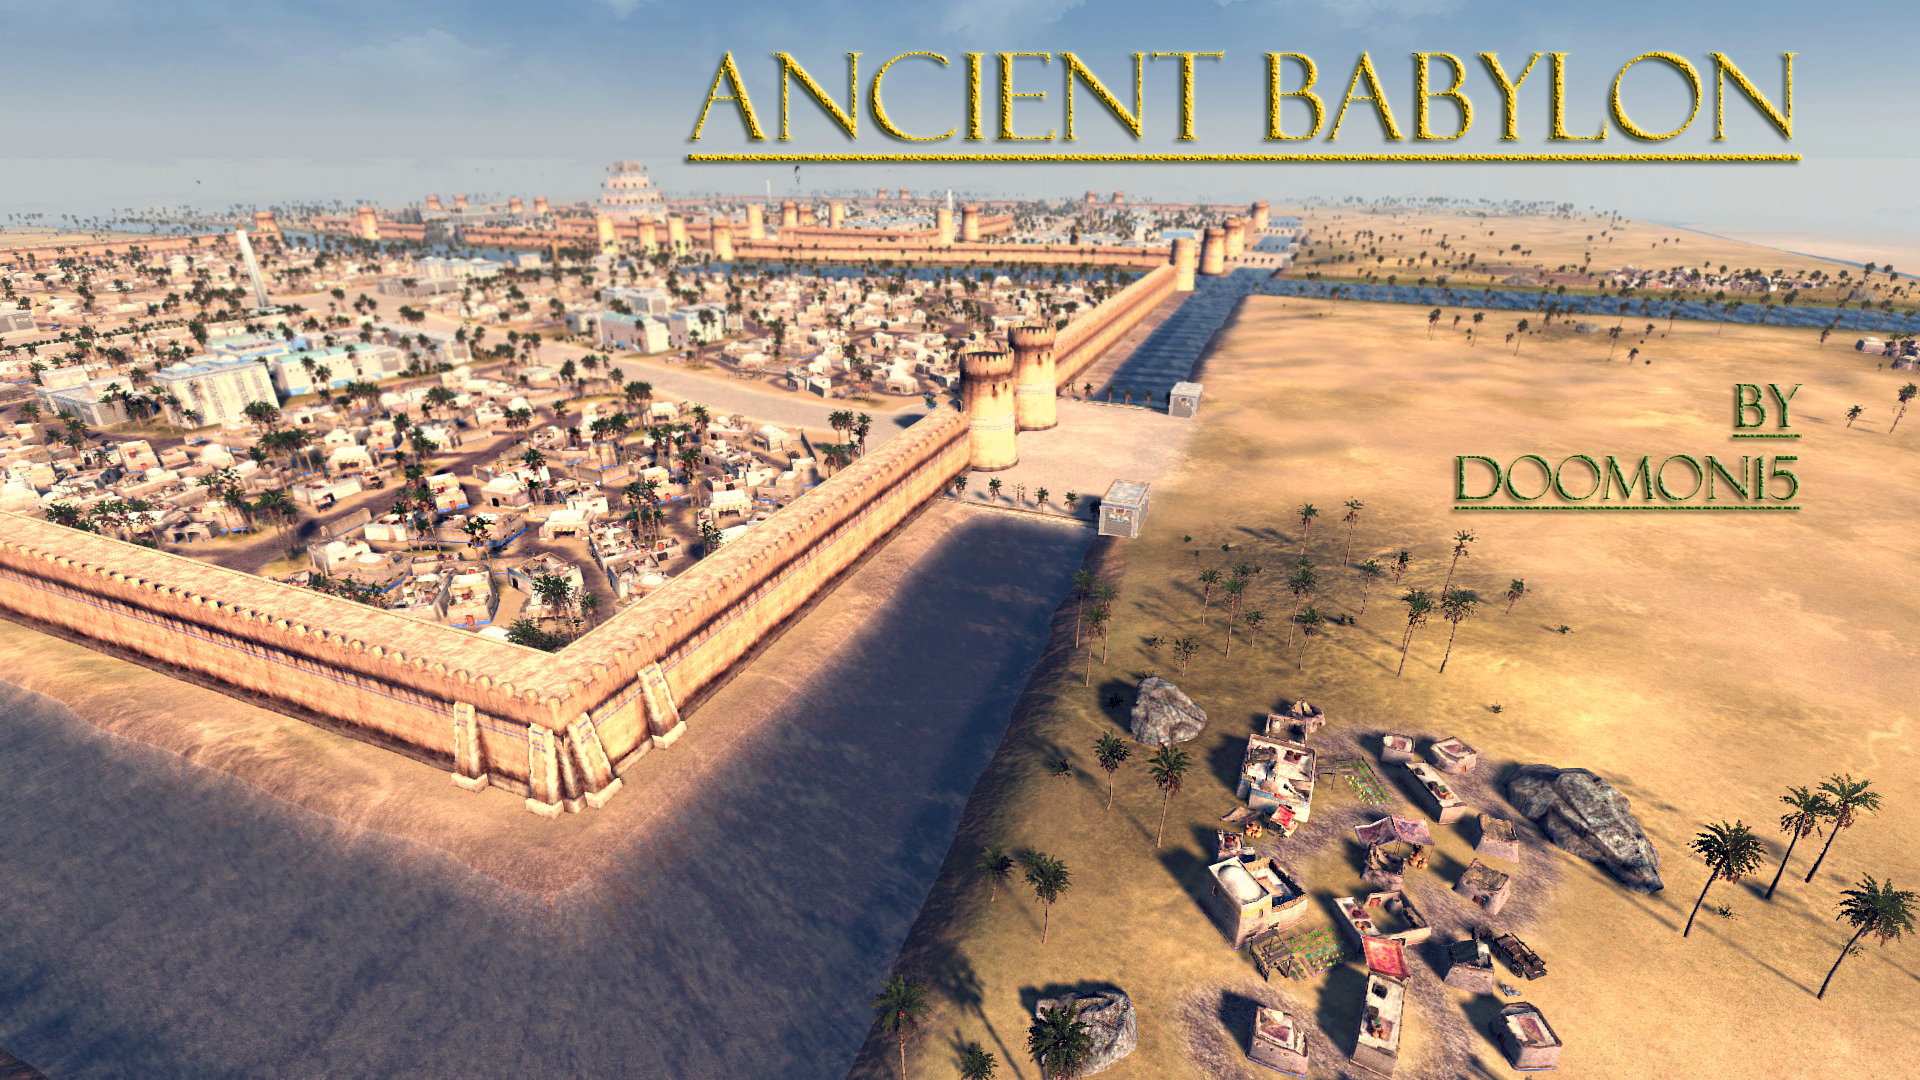 Ancient Babylon Pictures 22